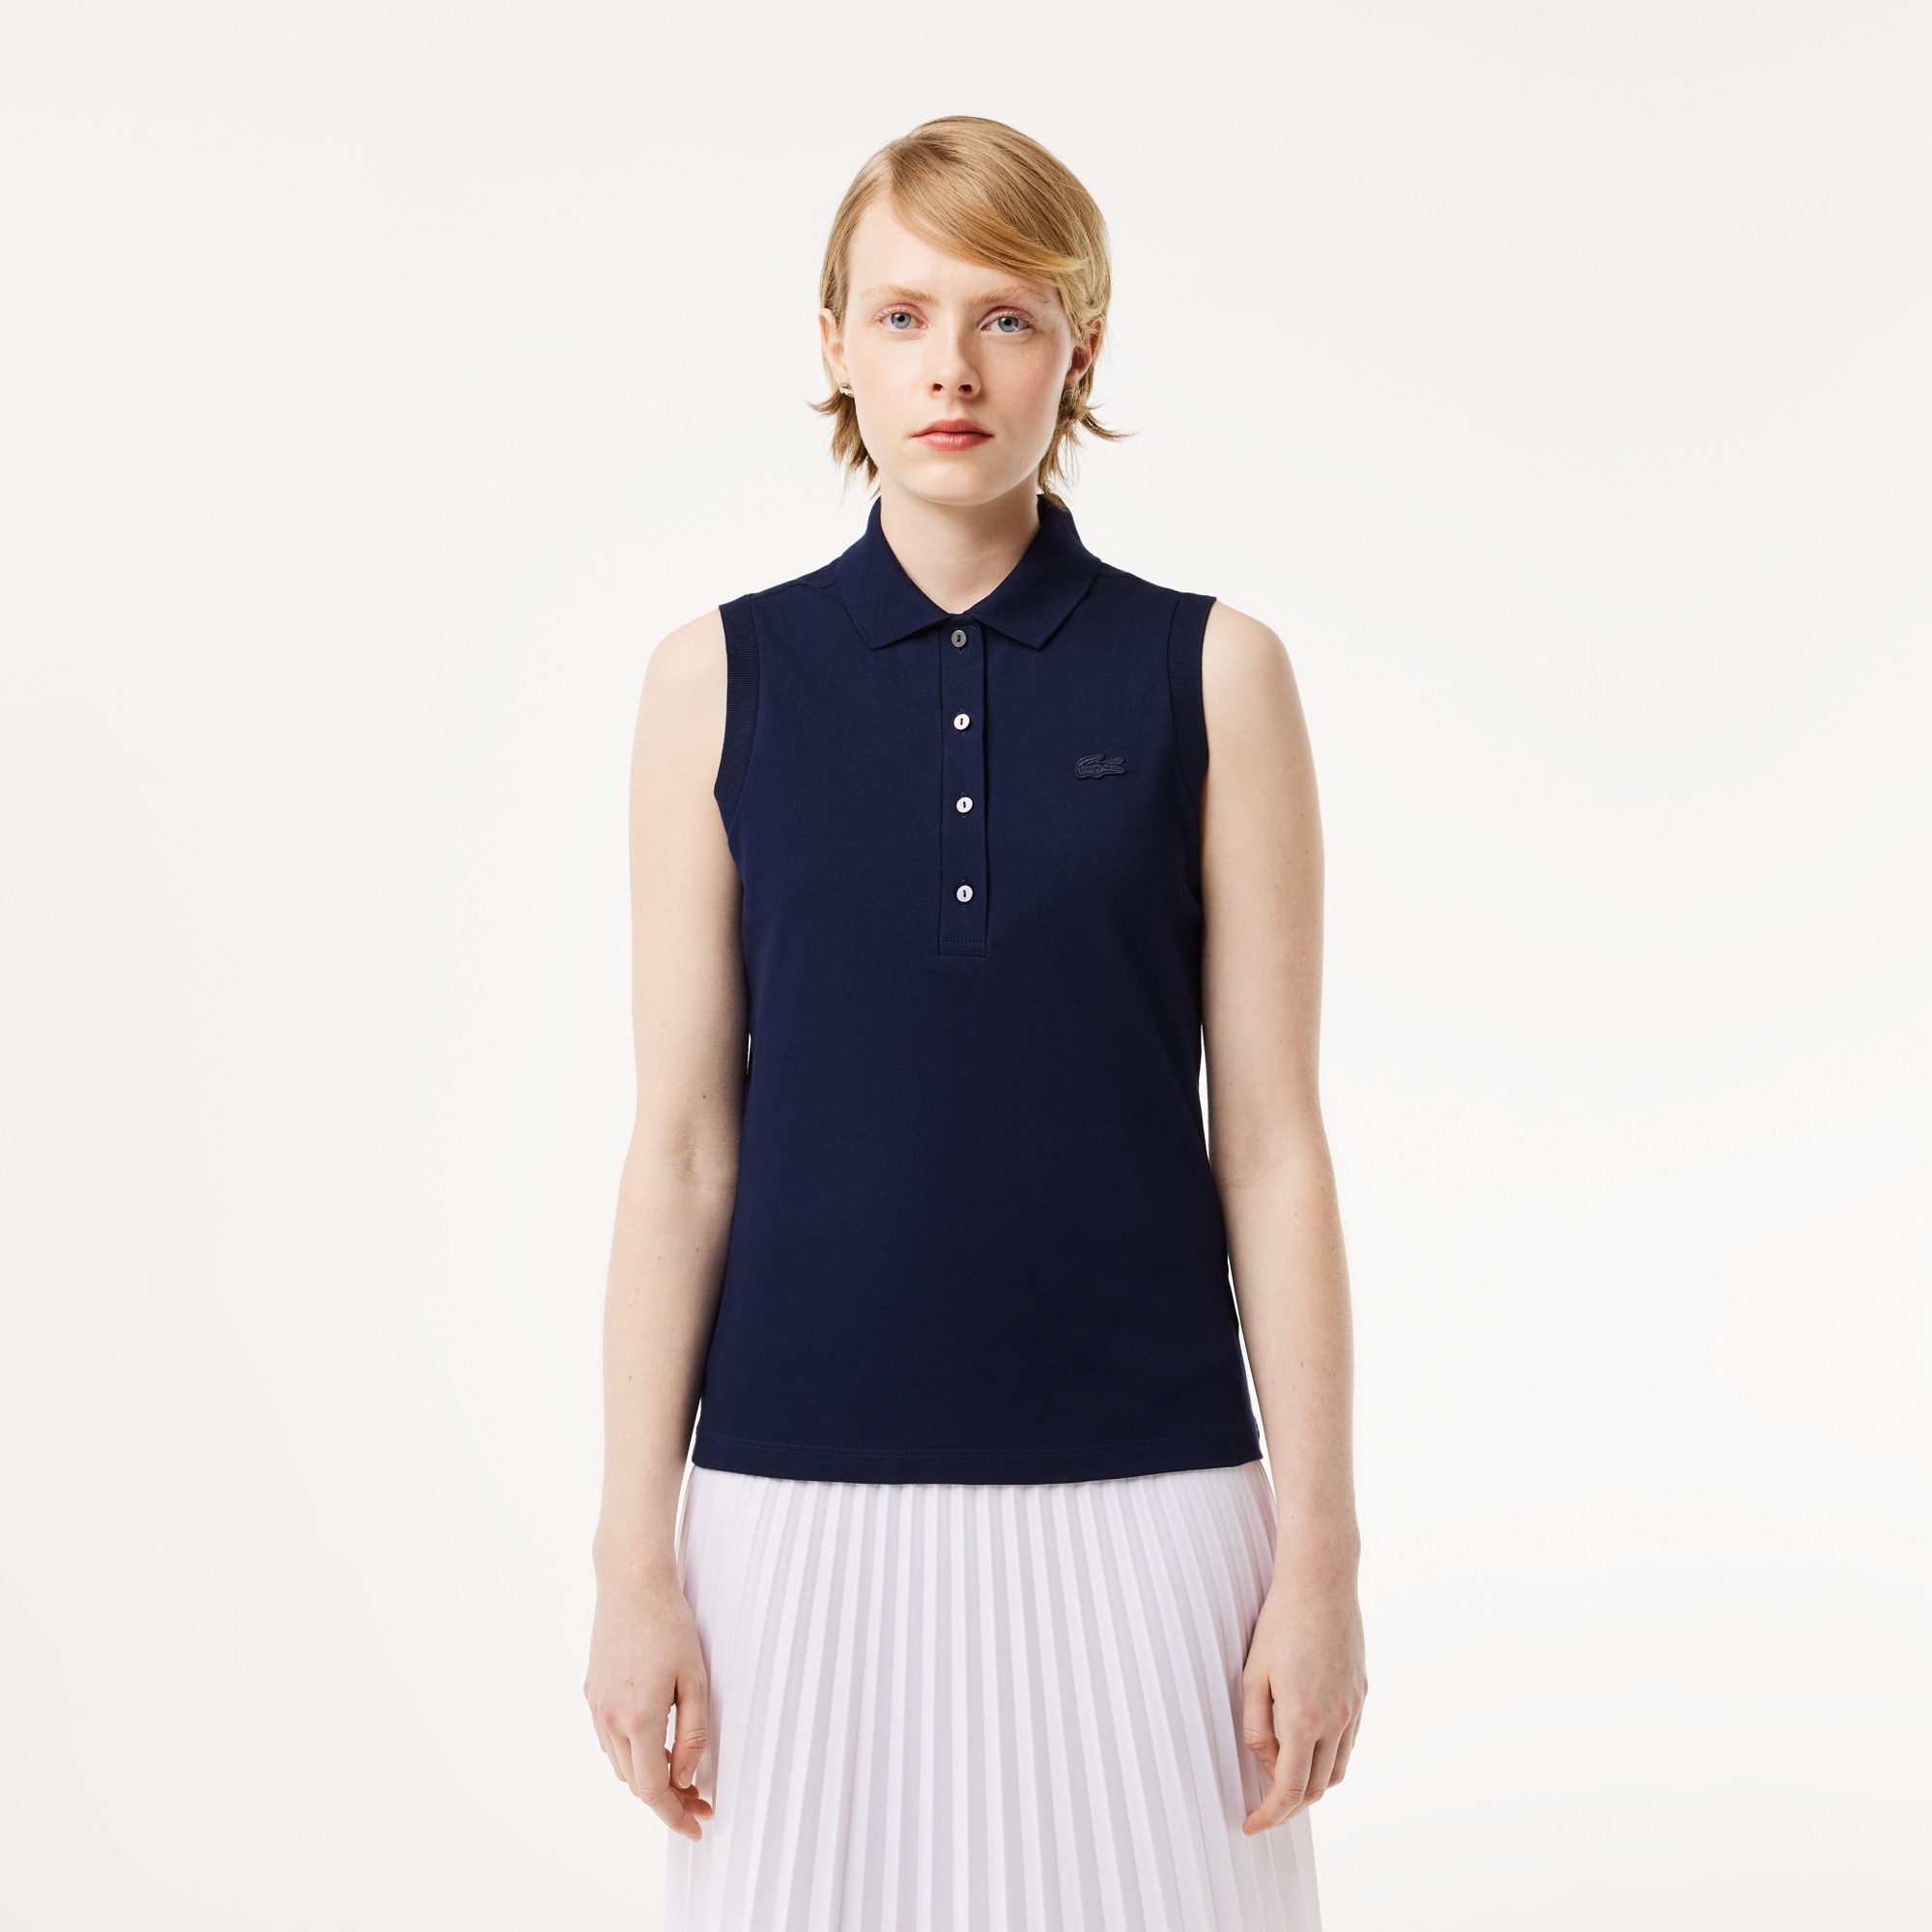 Lacoste Womens Slim Fit Sleeveless Cotton Pique Polo Shirt